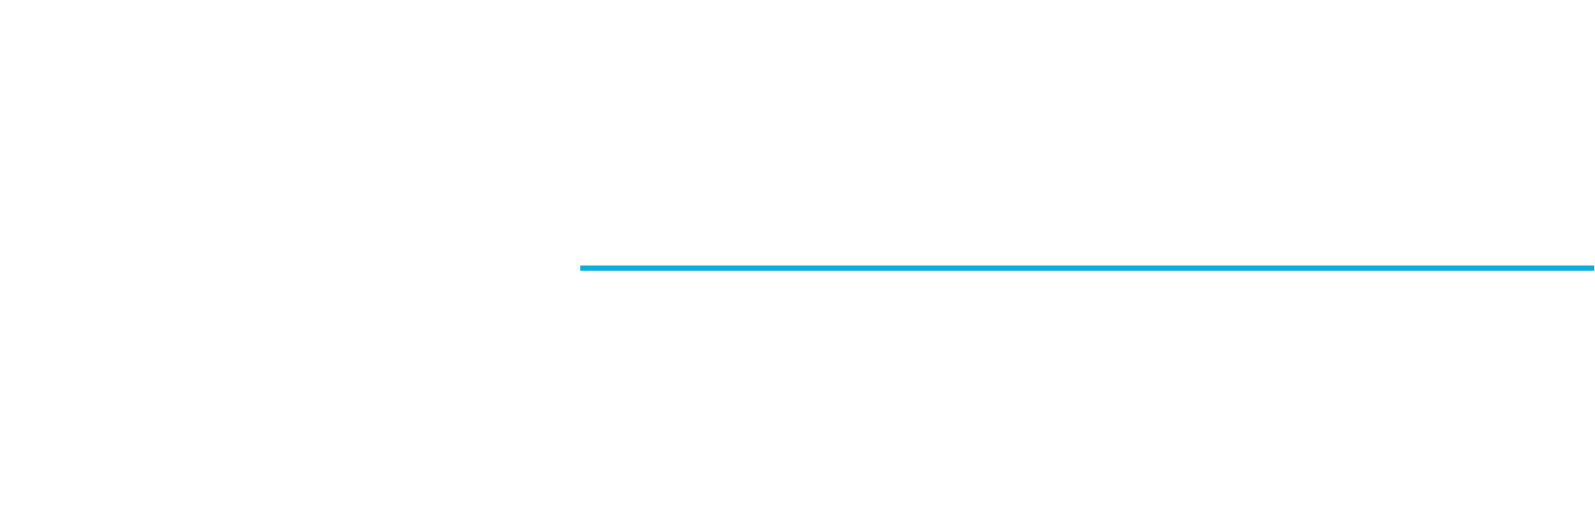 Jessup University Libraries